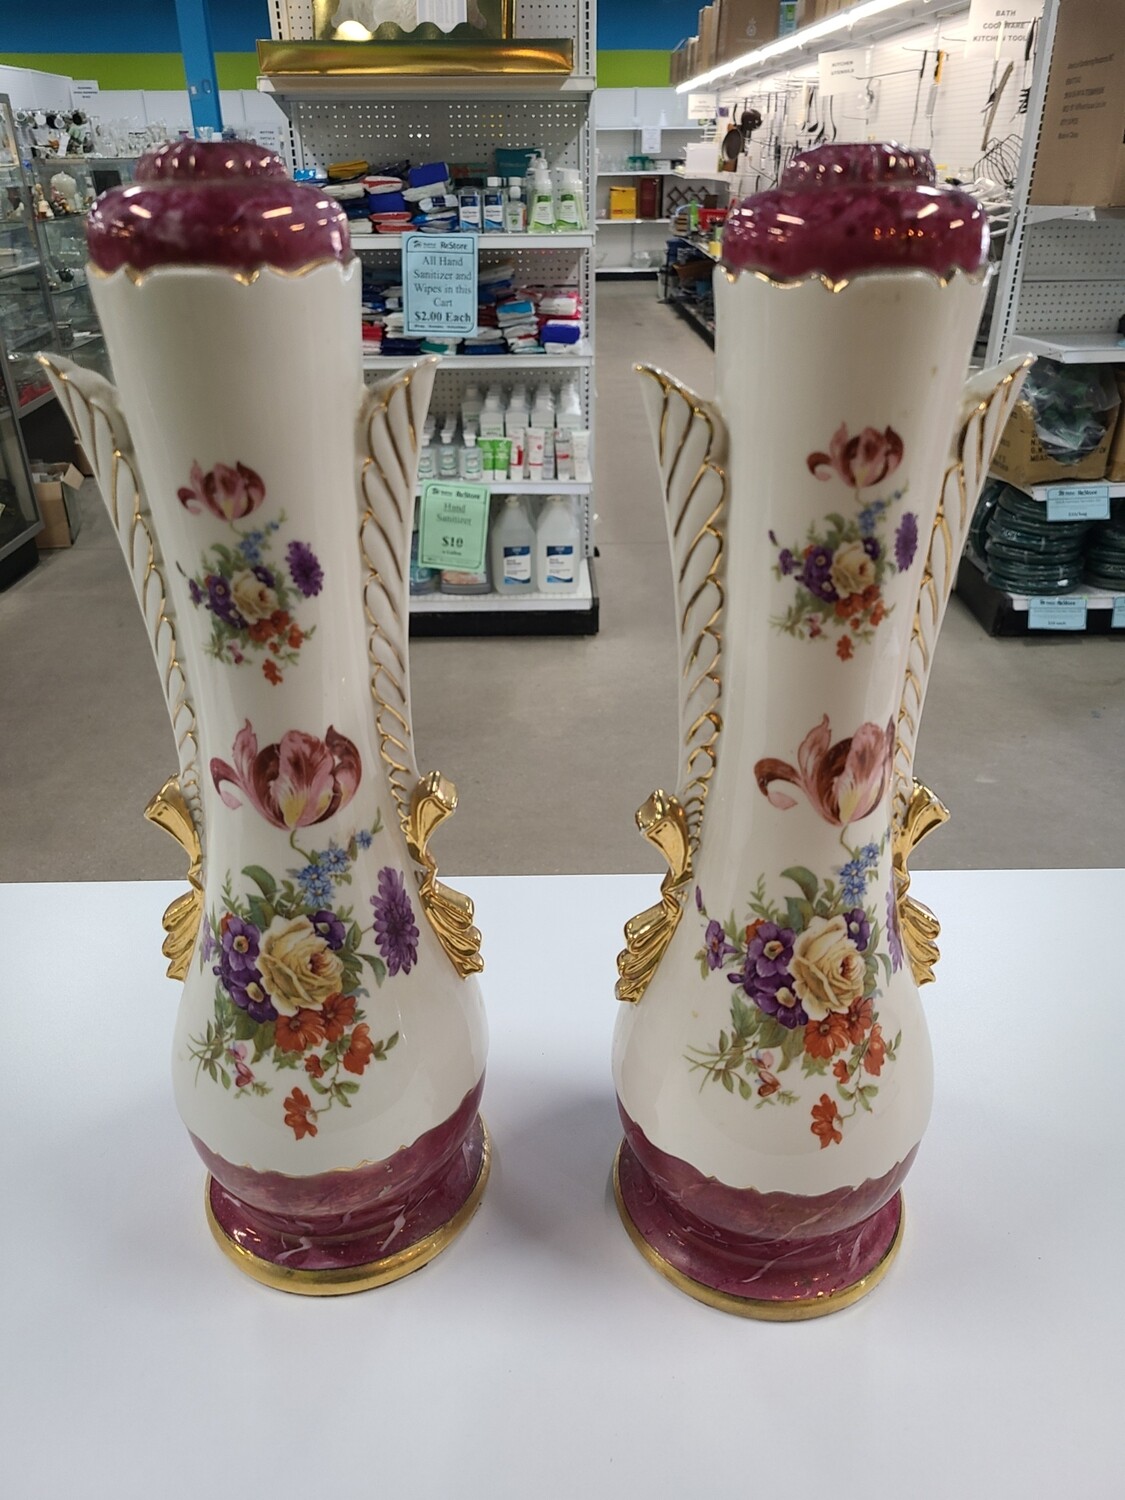 Pair of Porcelain Lamps